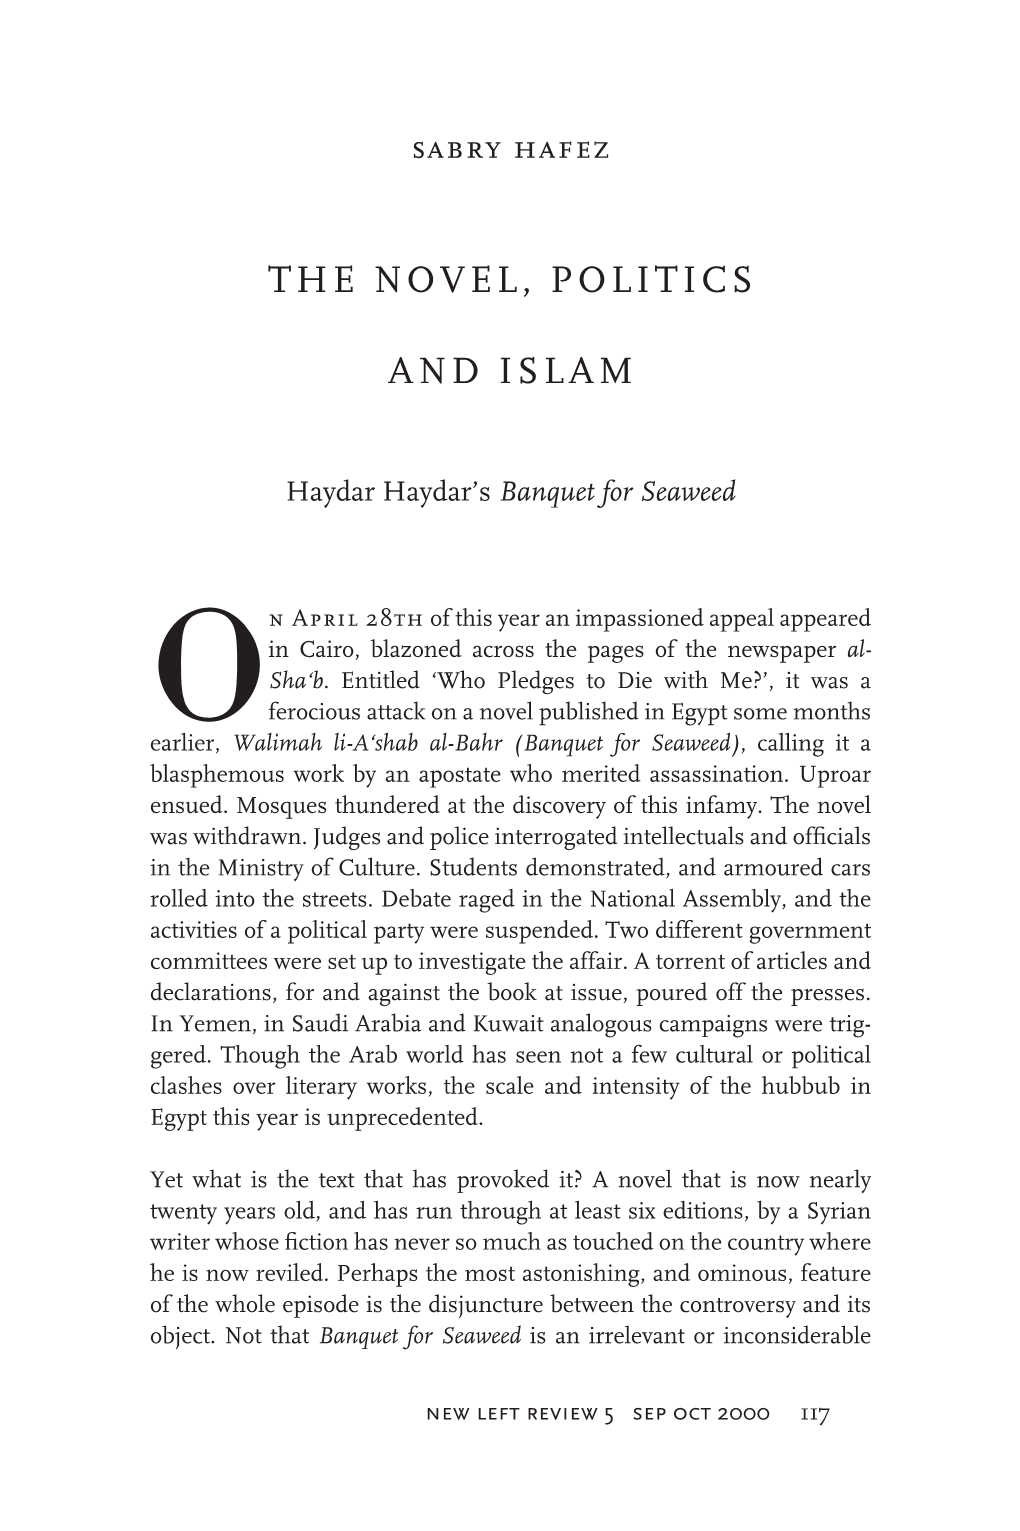 The Novel, Politics and Islam